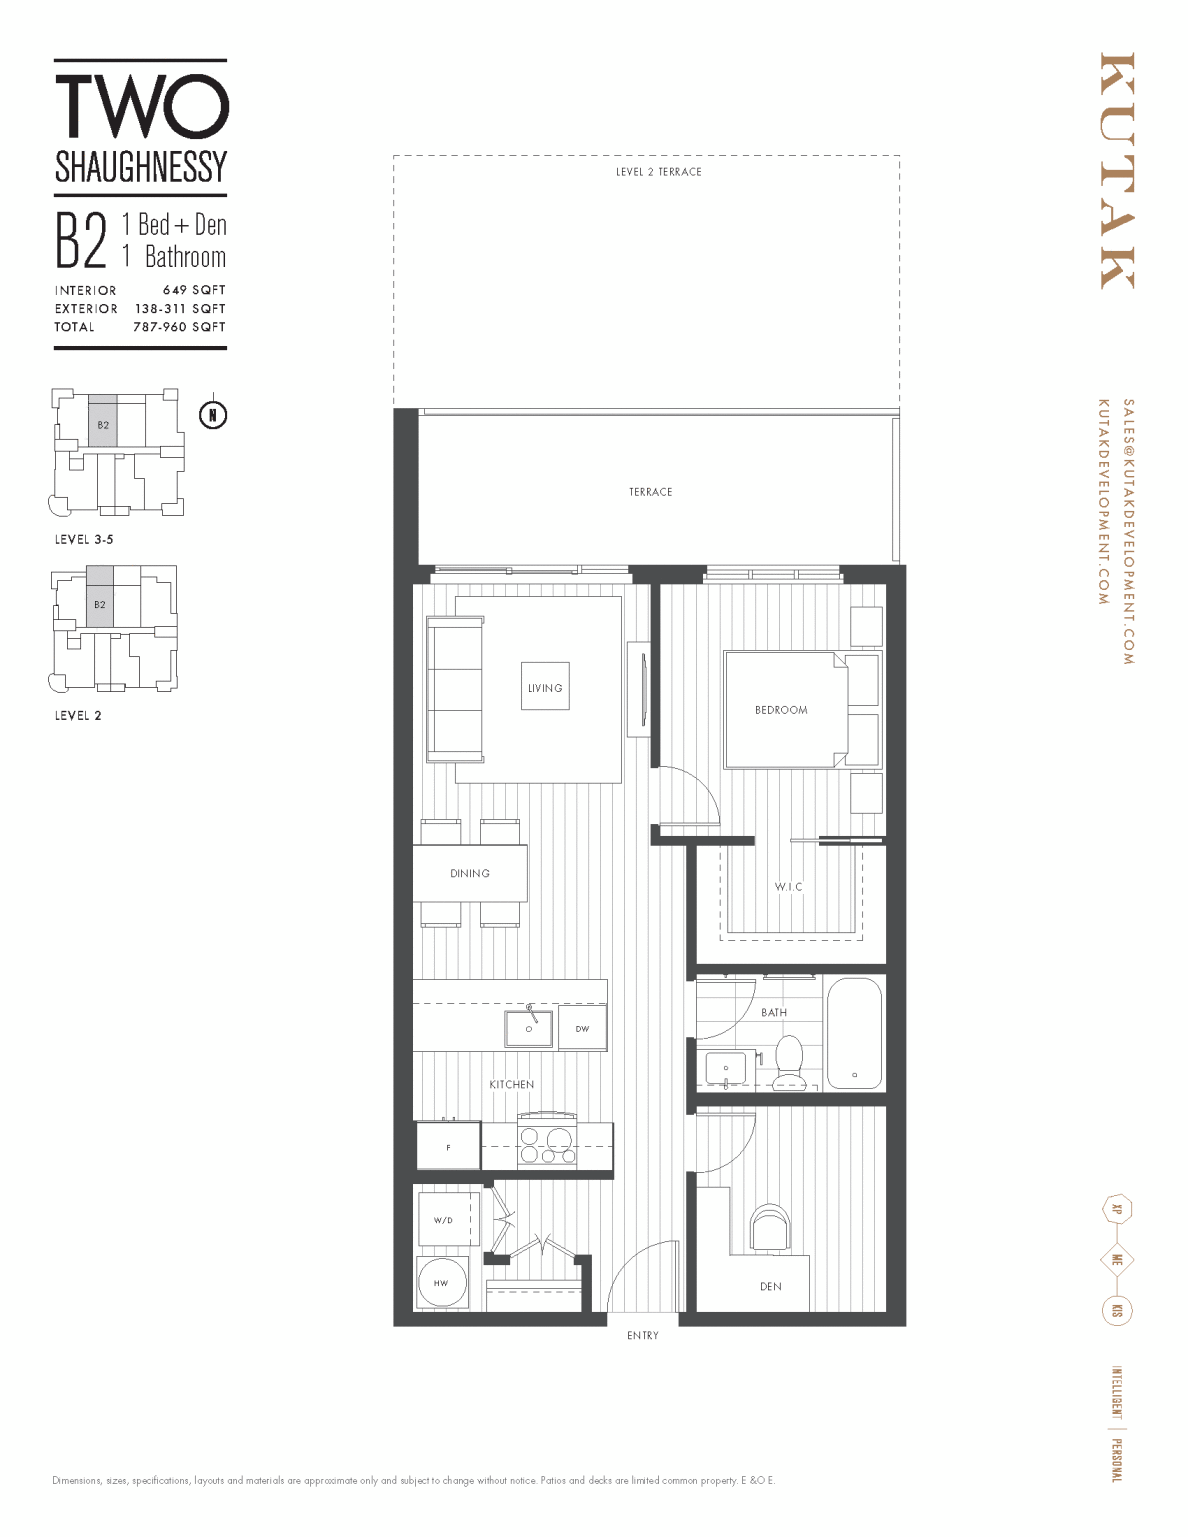 Two Shaughnessy Floor Plan B2